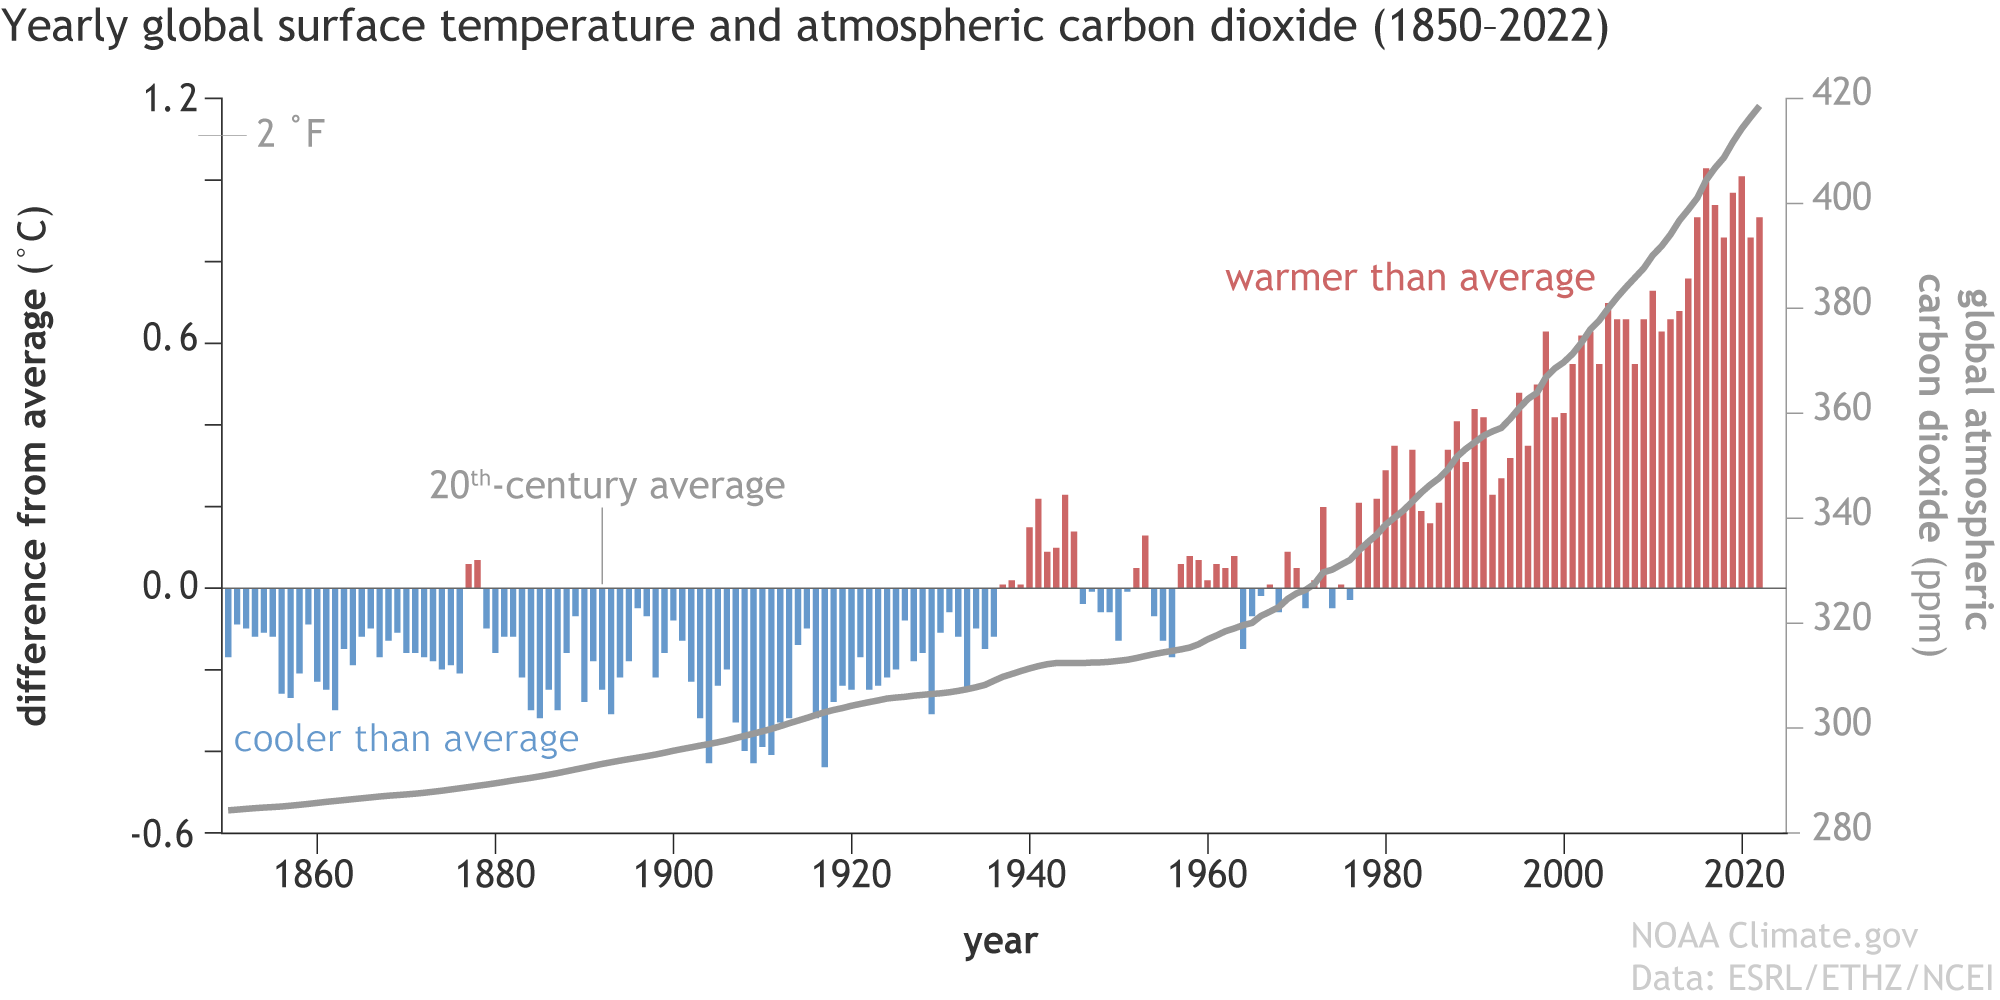 GlobalTemp_vs_carbon_dioxide_18502022.png NOAA Climate.gov